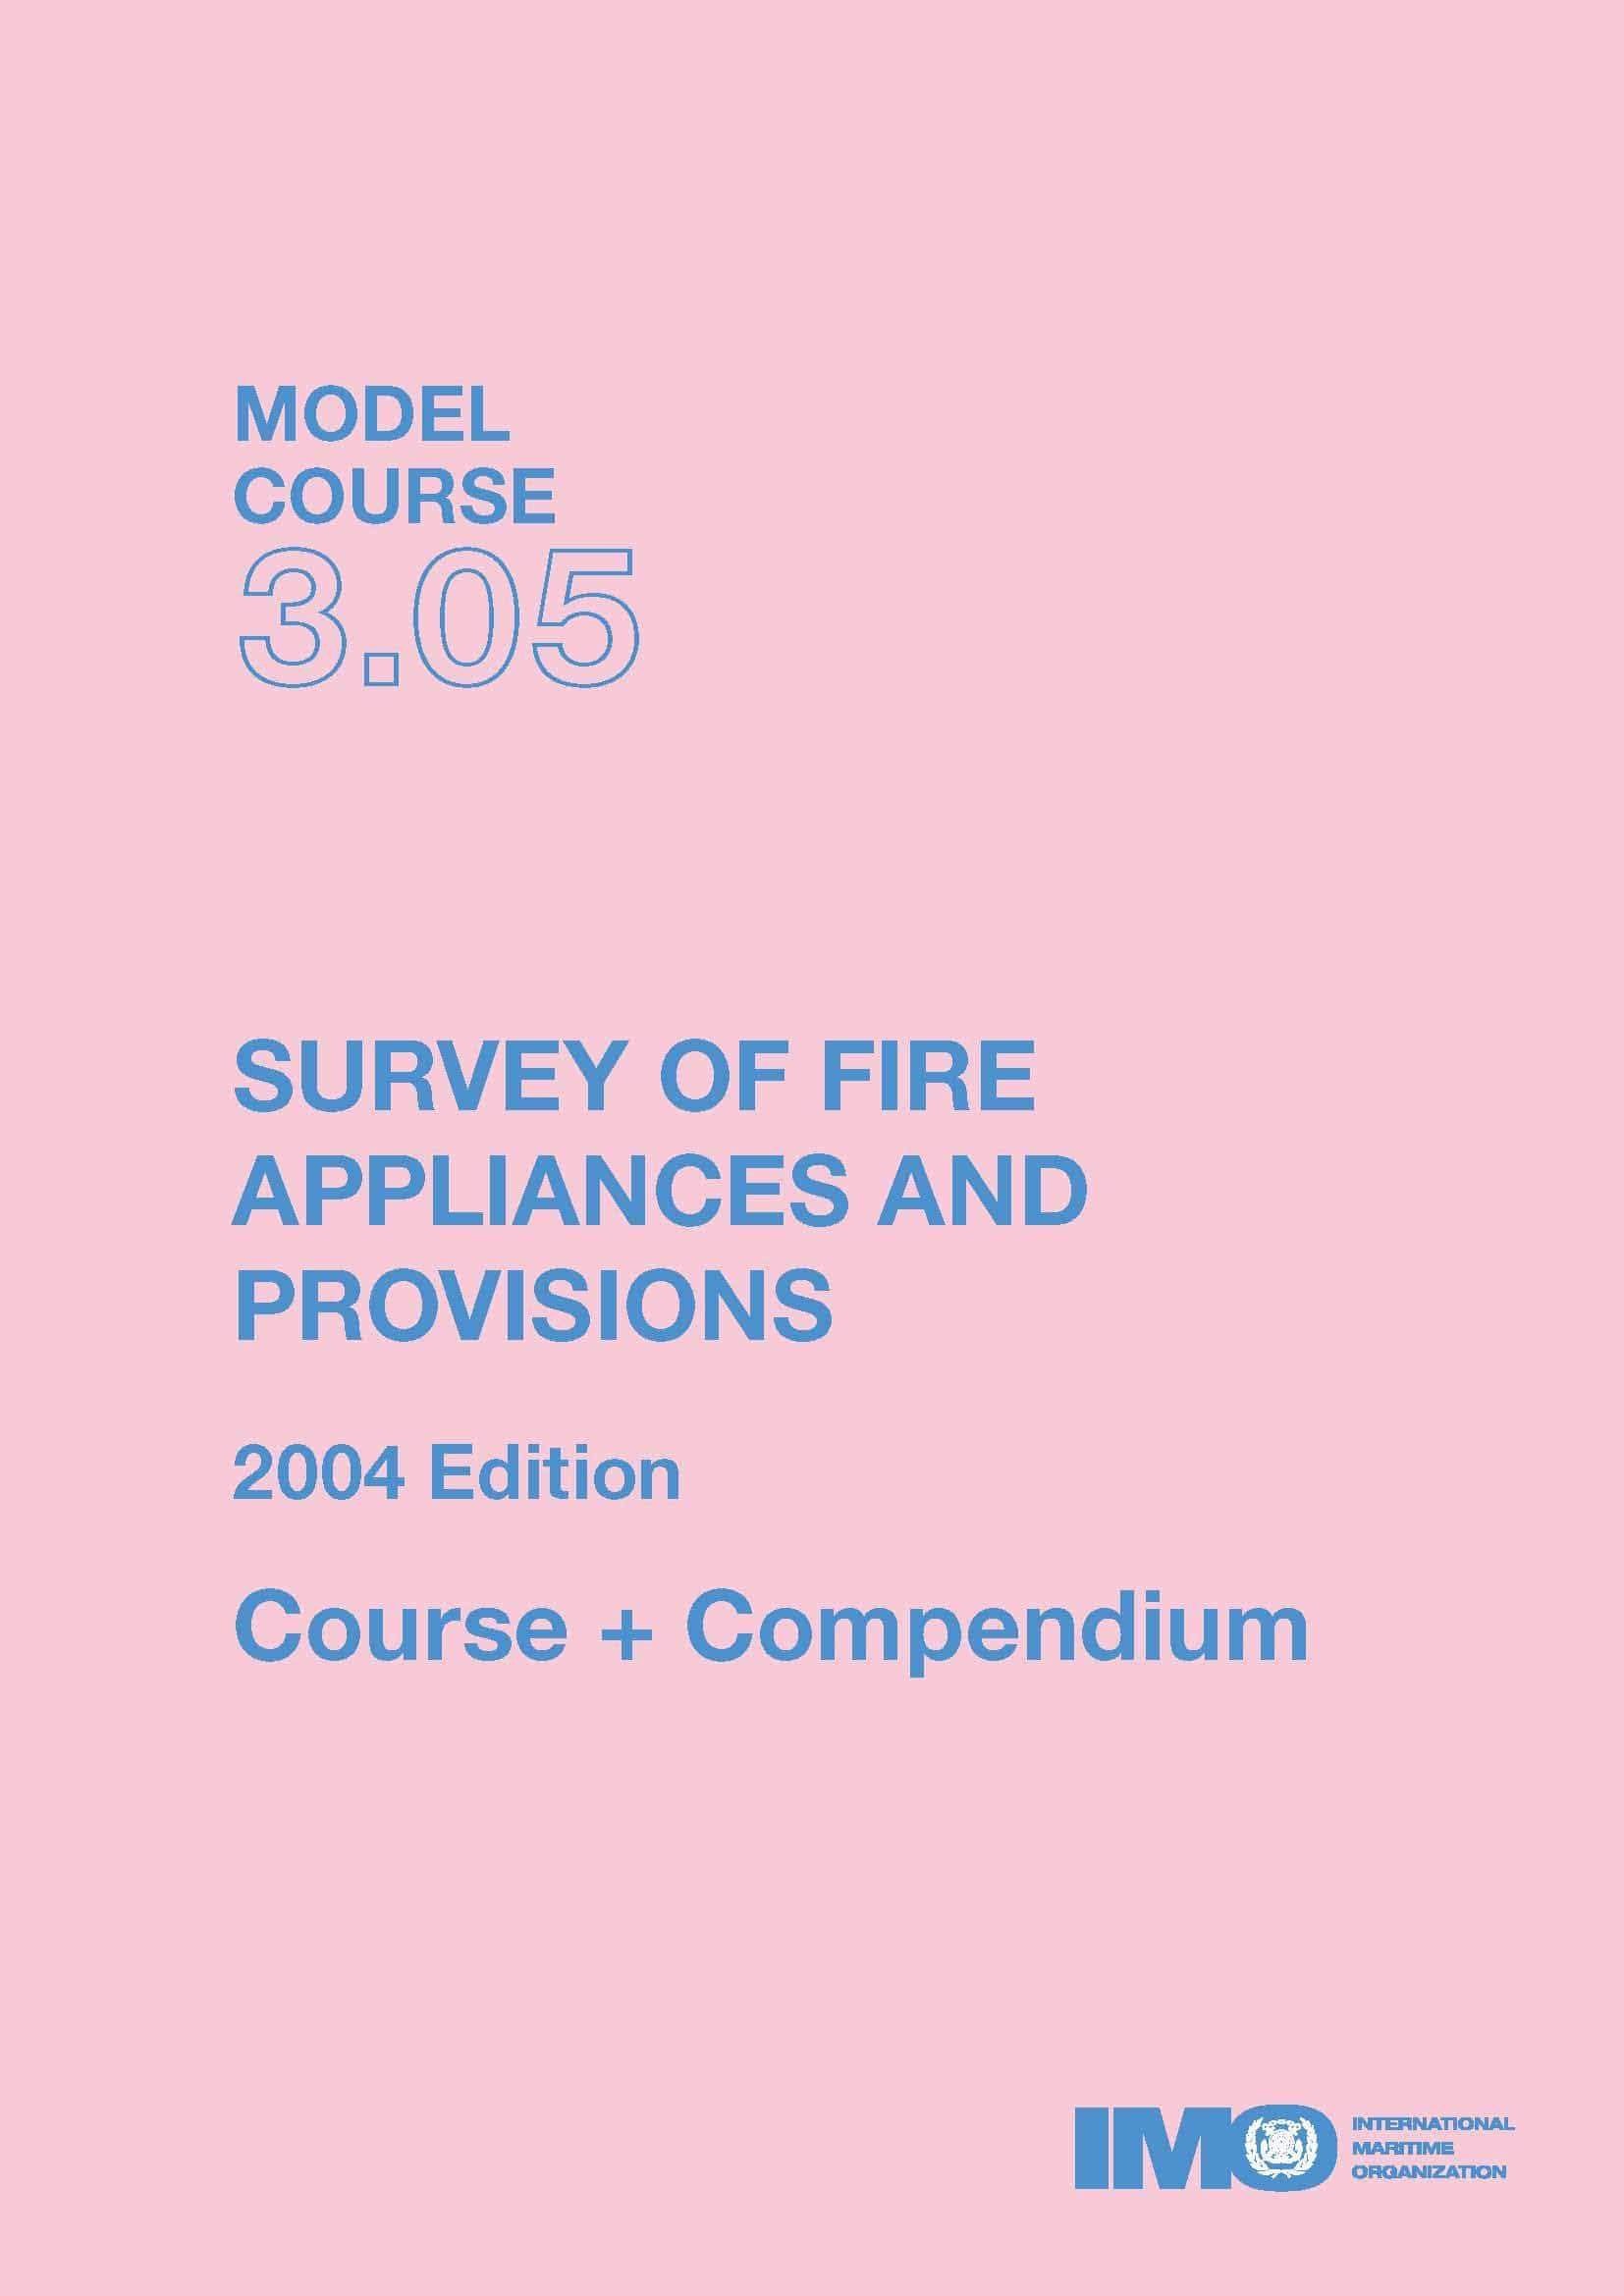 (Model Course 3.05) Survey of Fire Appliances and Provisions - Plus Compendium, 2004 Edition